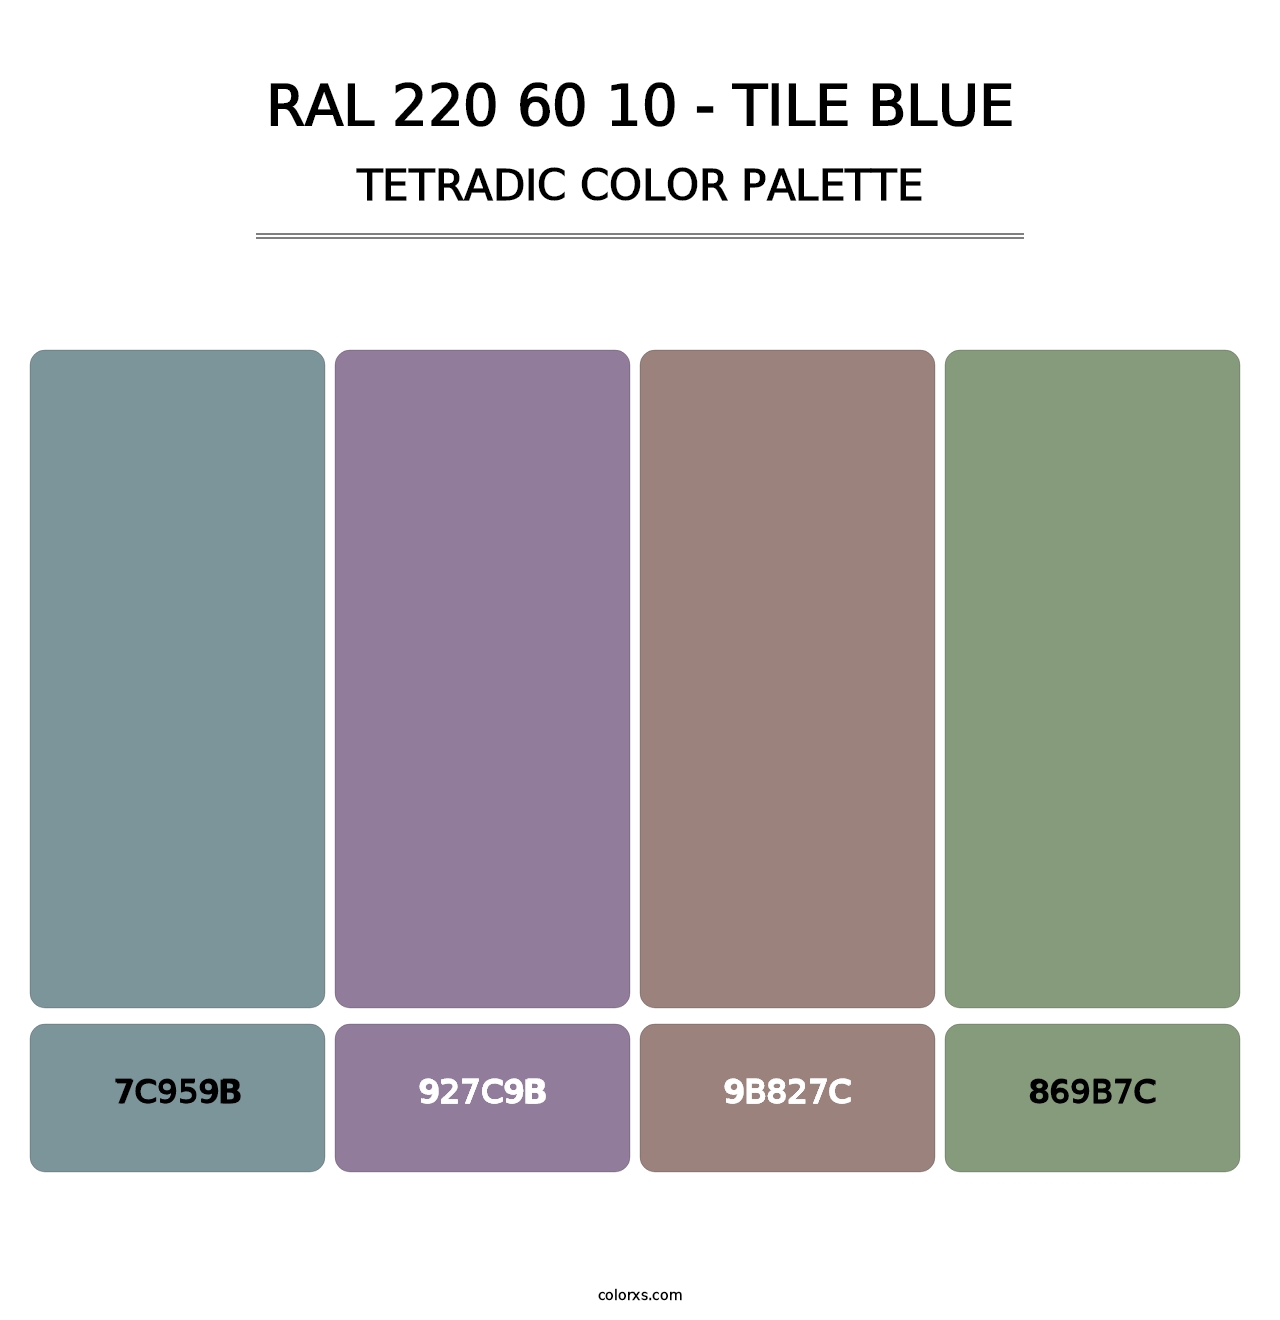 RAL 220 60 10 - Tile Blue - Tetradic Color Palette